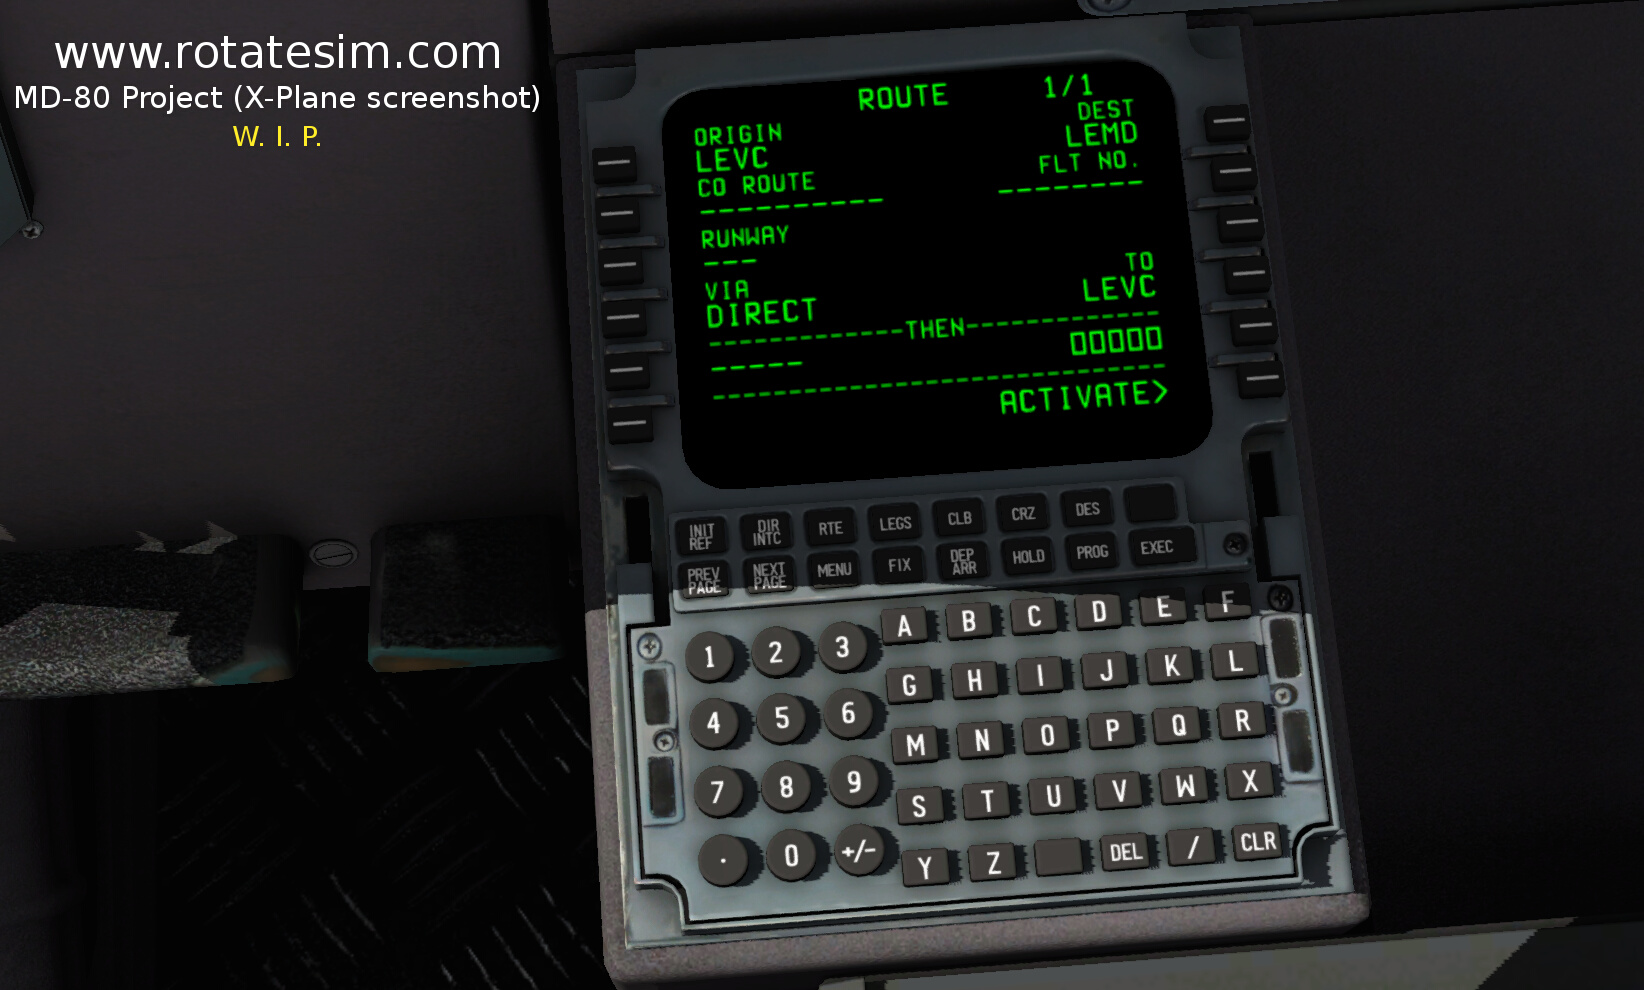 MD-80 screenshot FMC 03 ROUTE